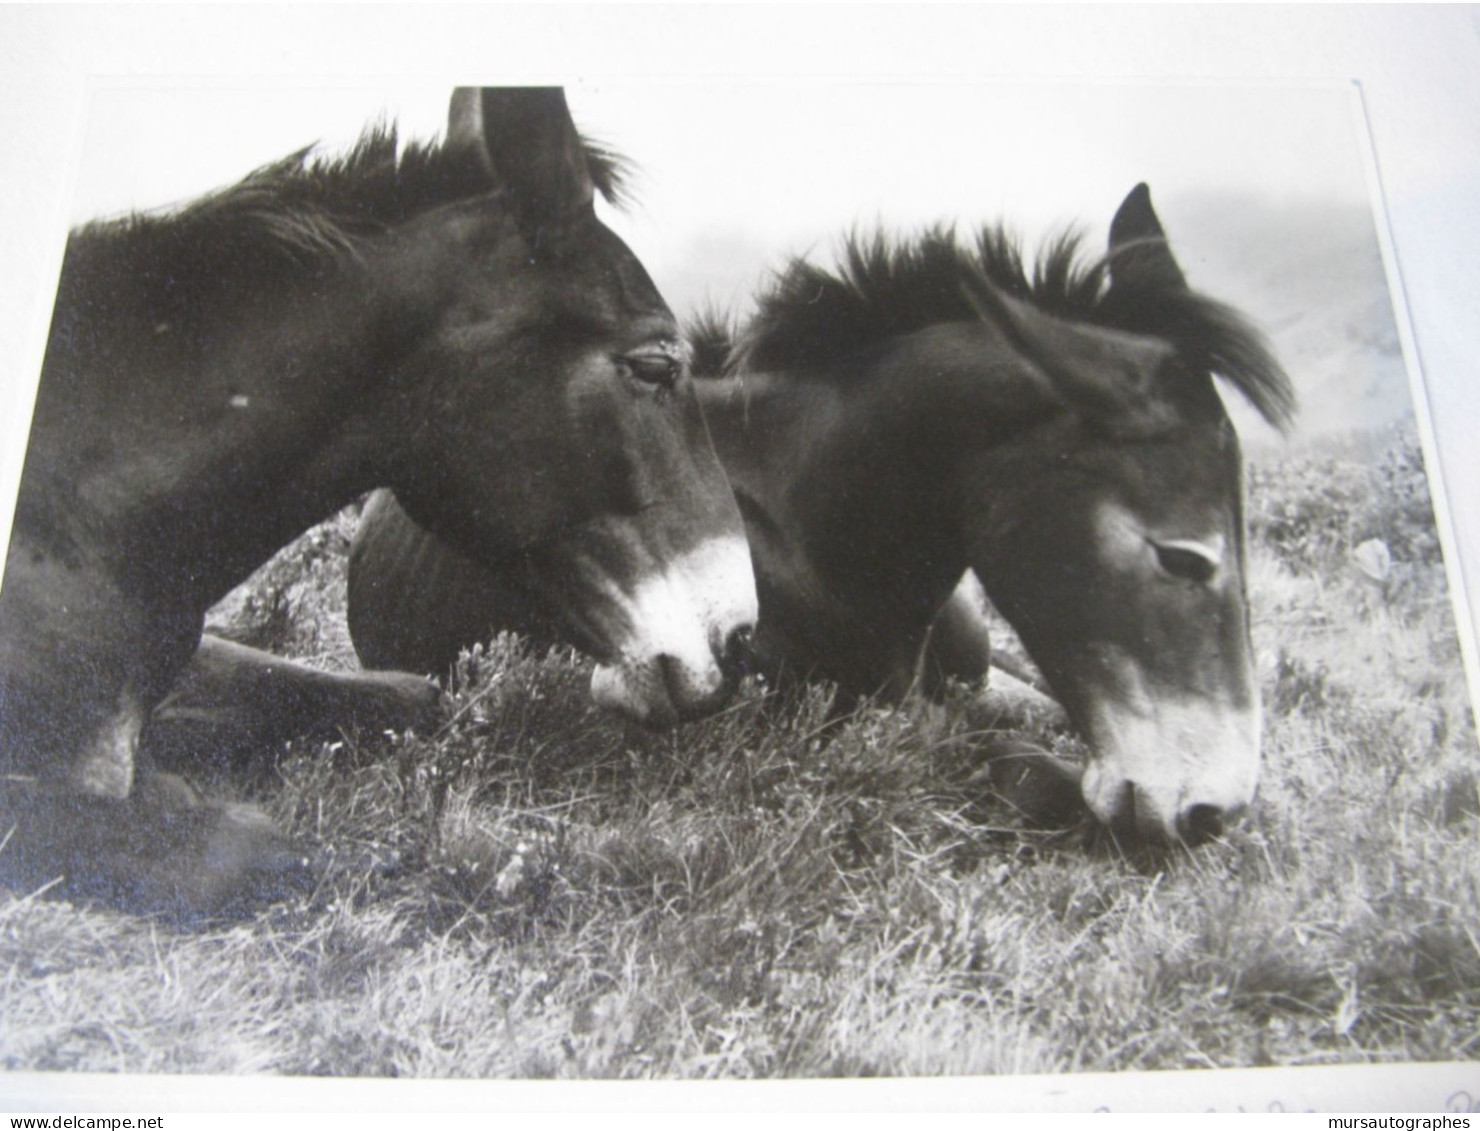 BELLE PHOTOGRAPHIE N&B "DEUX MULETS" Vers 1940-50 Signé ANNELIES MANN - Gehandtekende Foto's